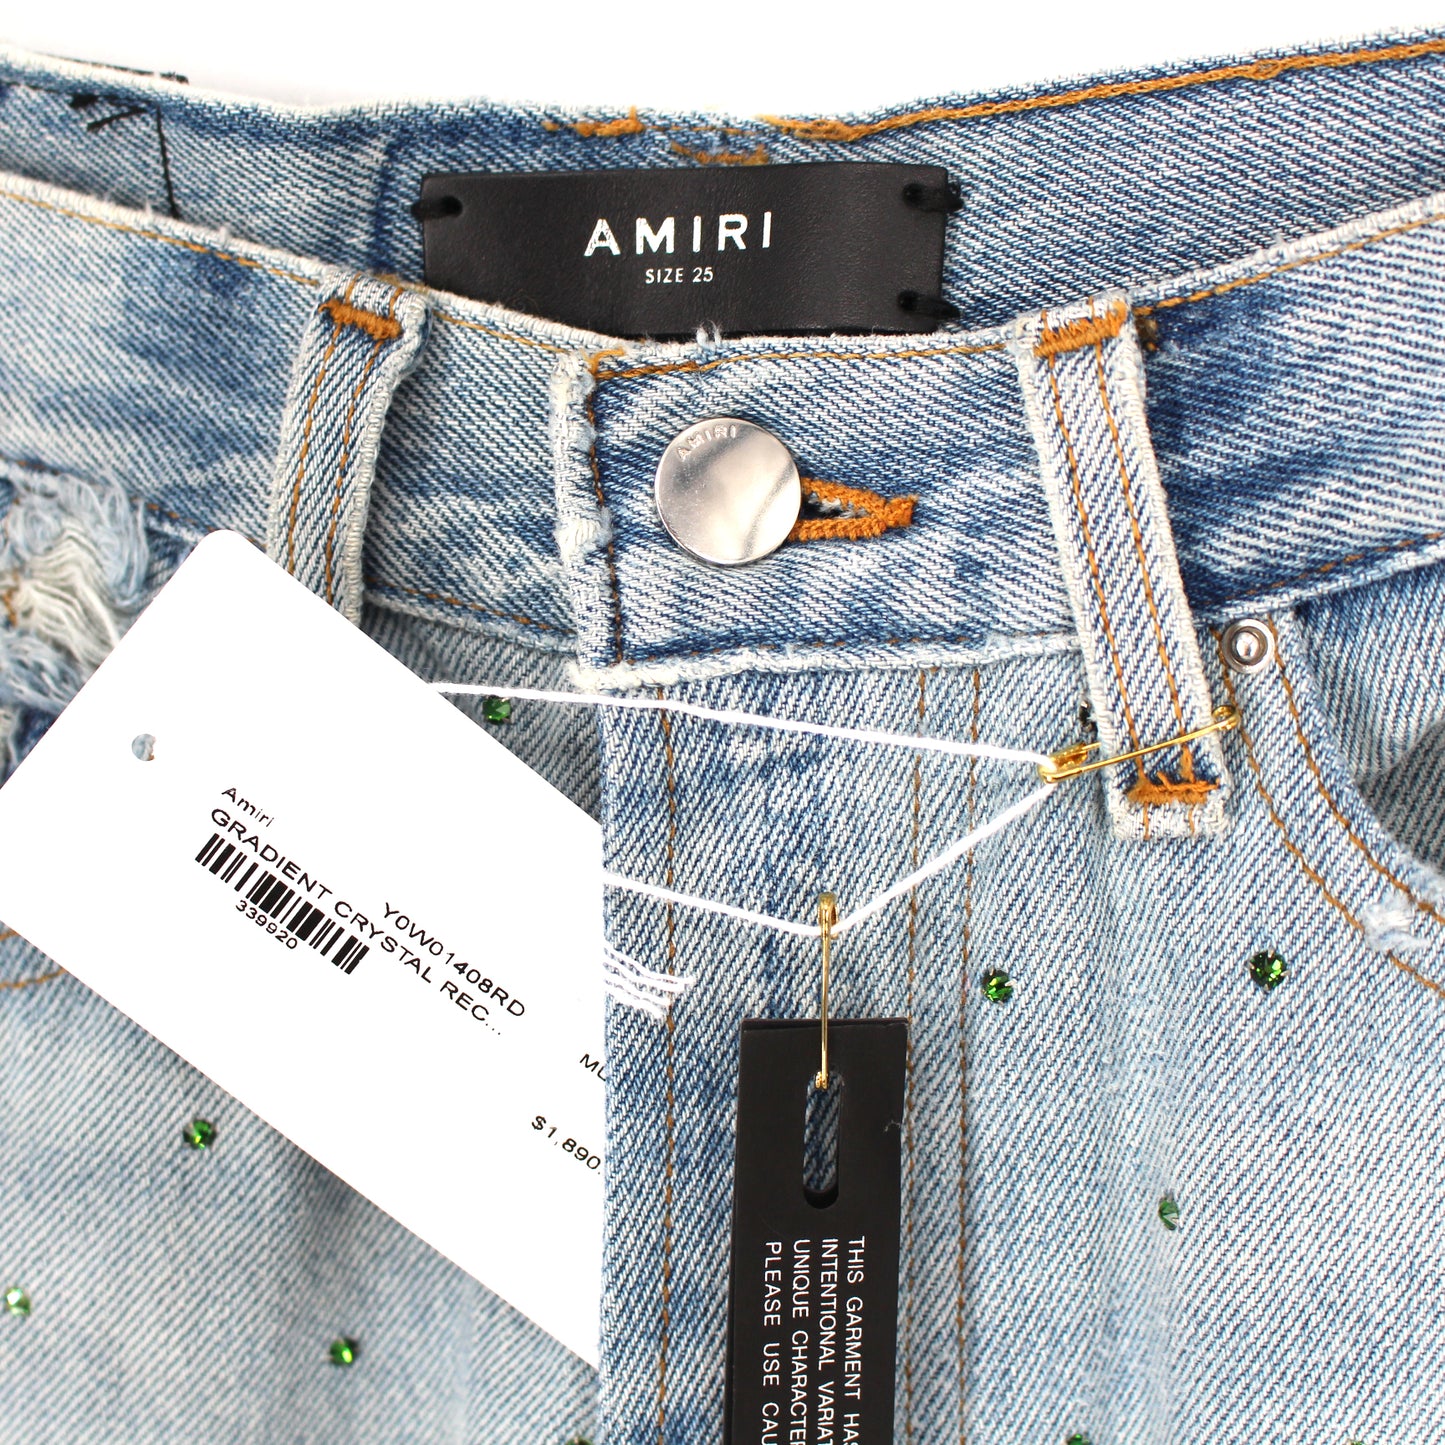 AMIRI Crystal Recon Jeans